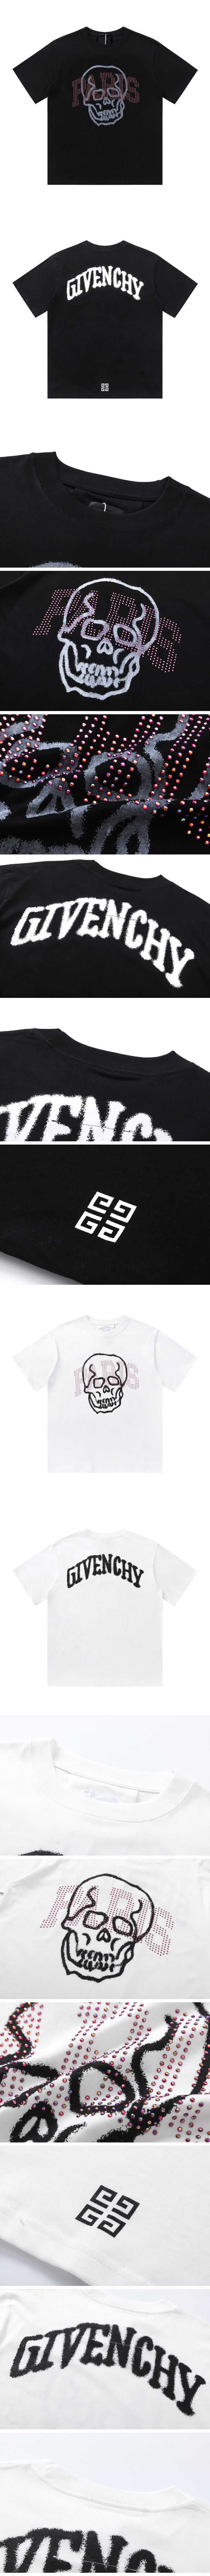 Givenchy Skull Design Tee ジバンシー スカル デザイン Tシャツ